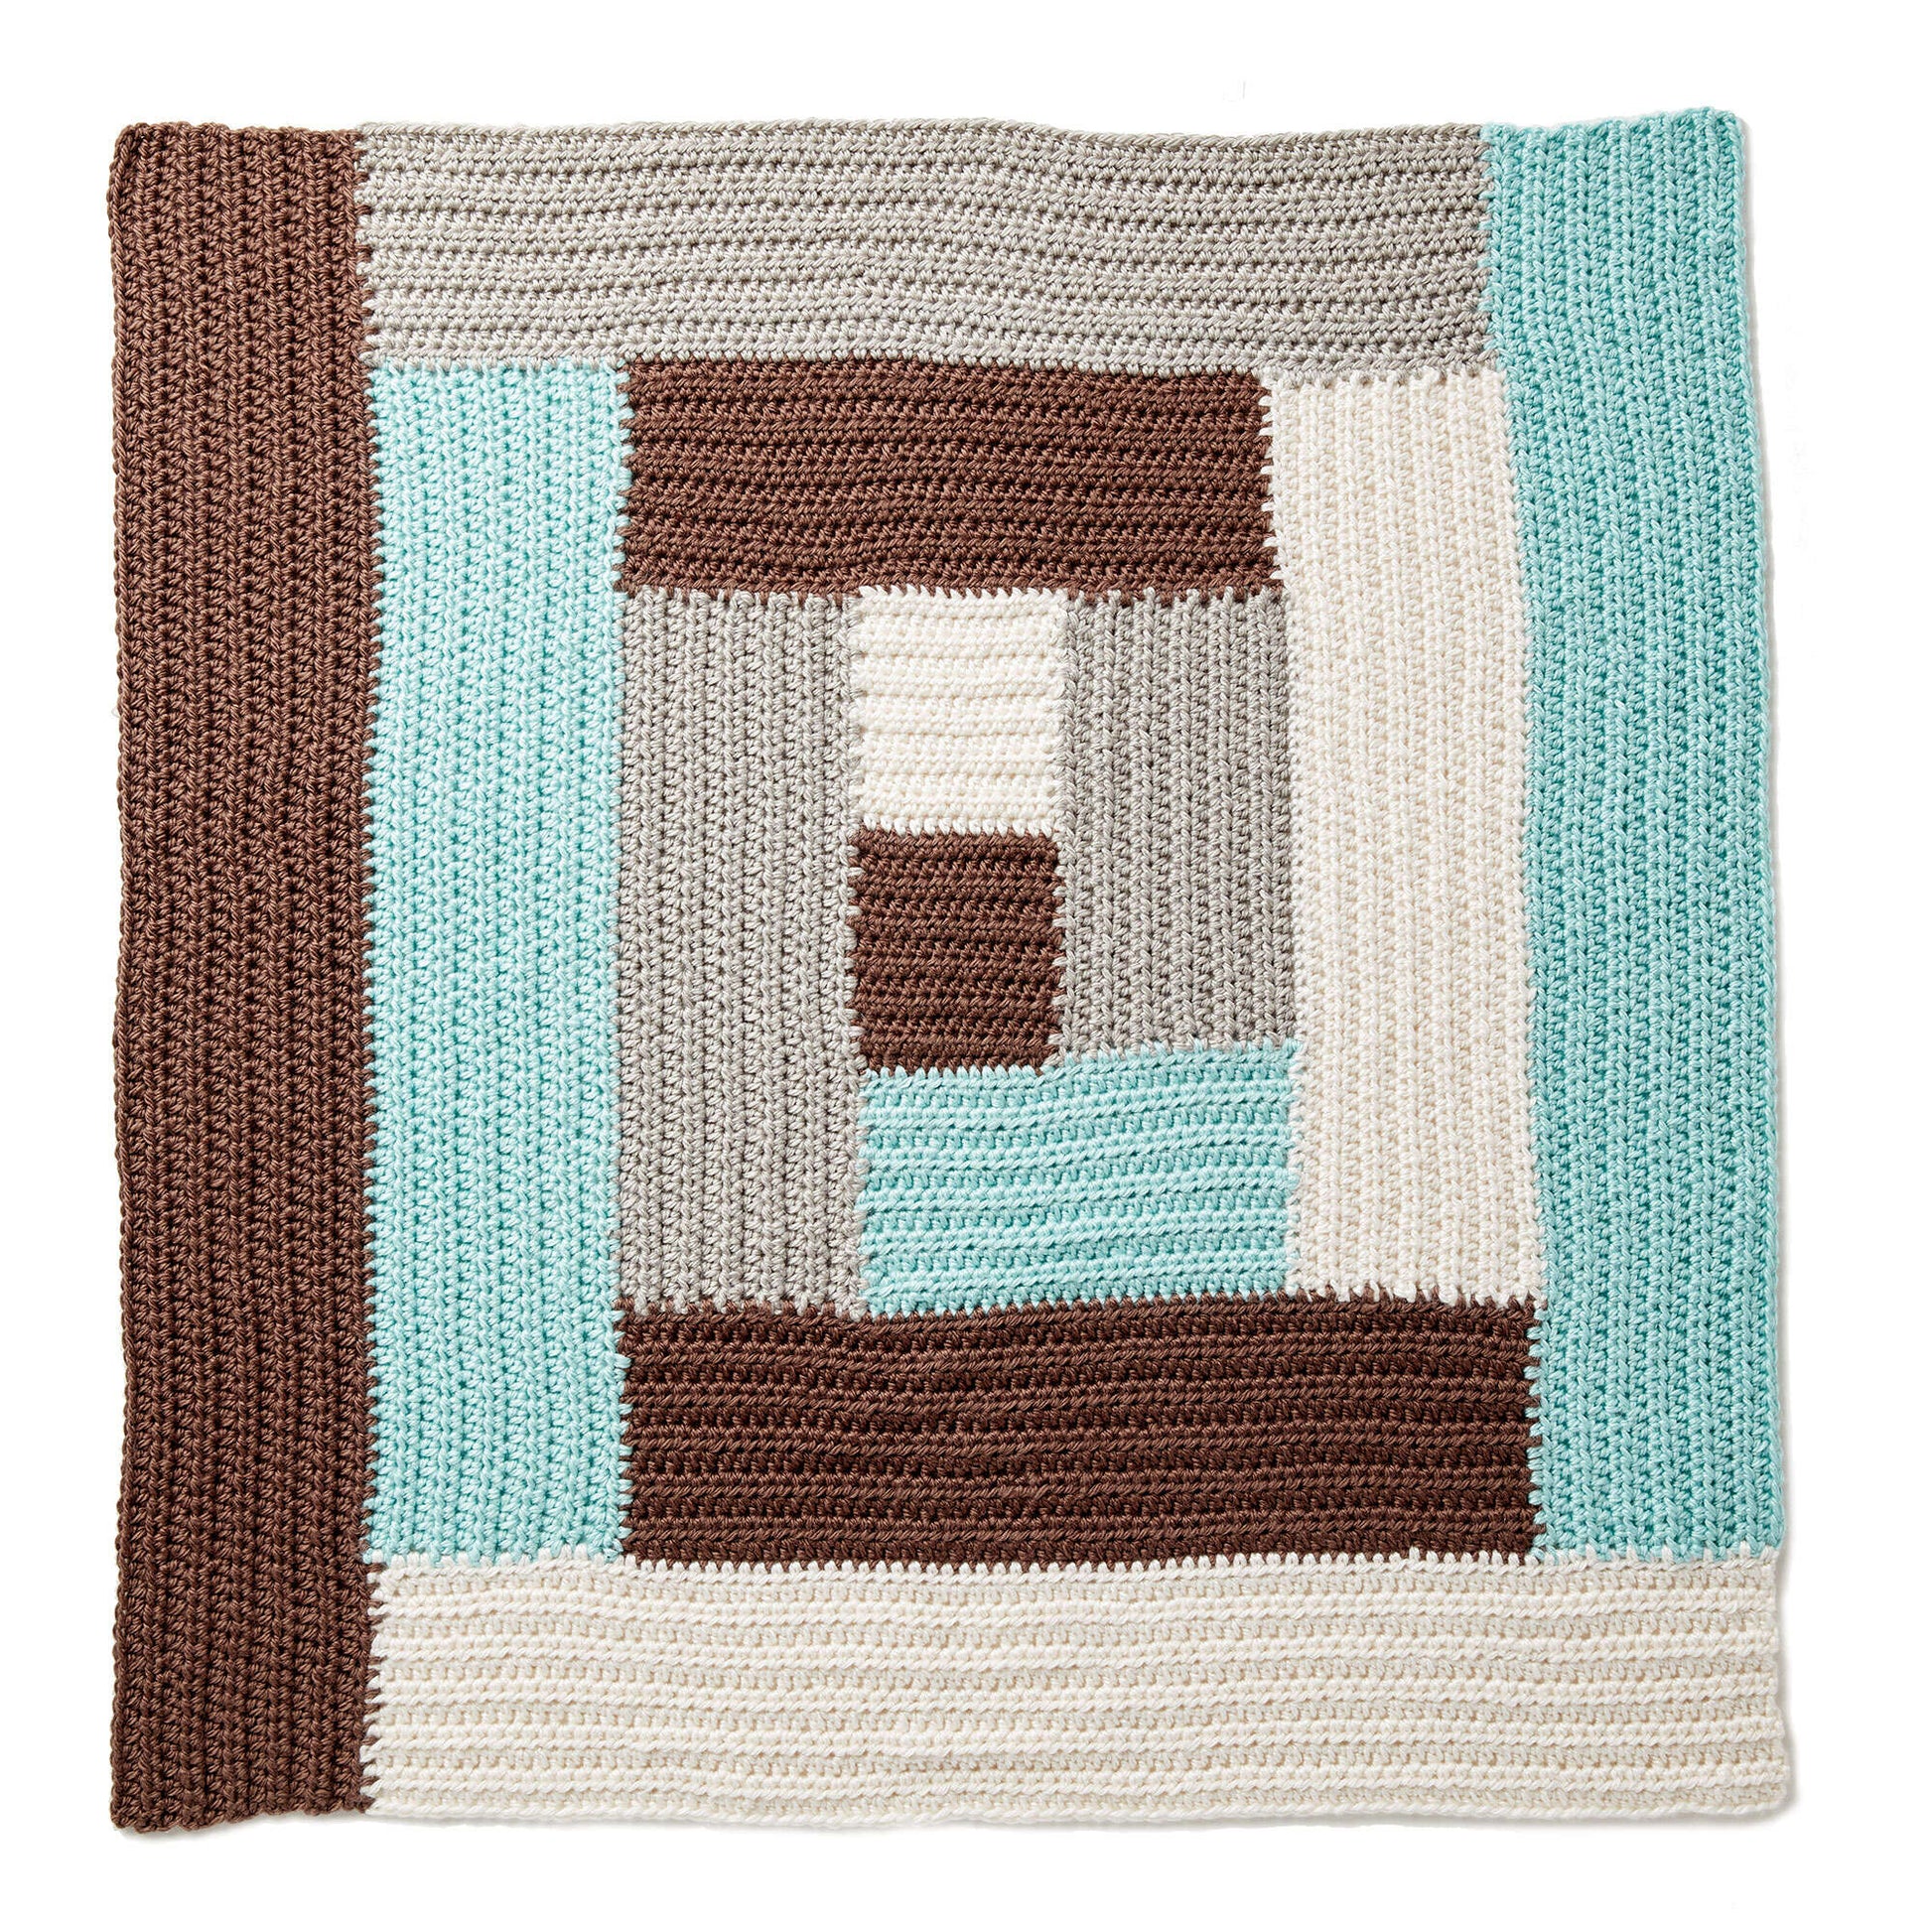 Bernat Log Cabin Crochet Baby Blanket Crochet Blanket made in Bernat Softee Baby Chunky yarn